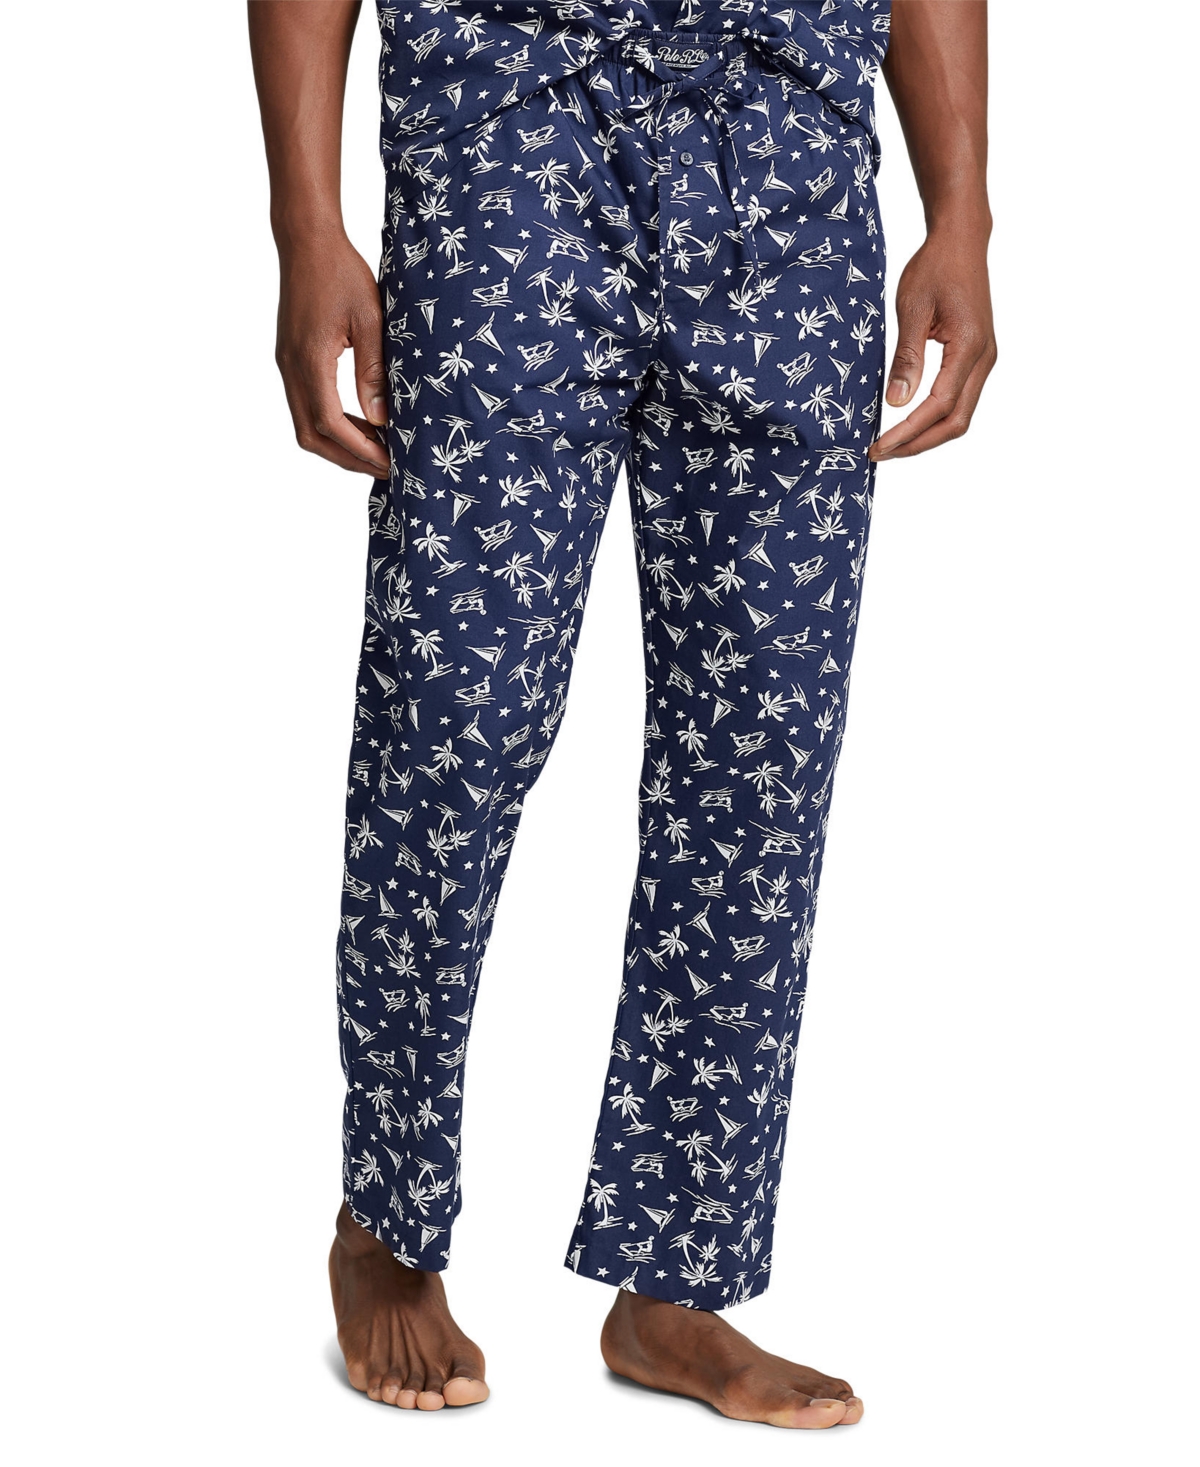 Men's Cotton Printed Pajama Pants - CRUISE NAVY BAHAMA WAKEBOARDER PRINT